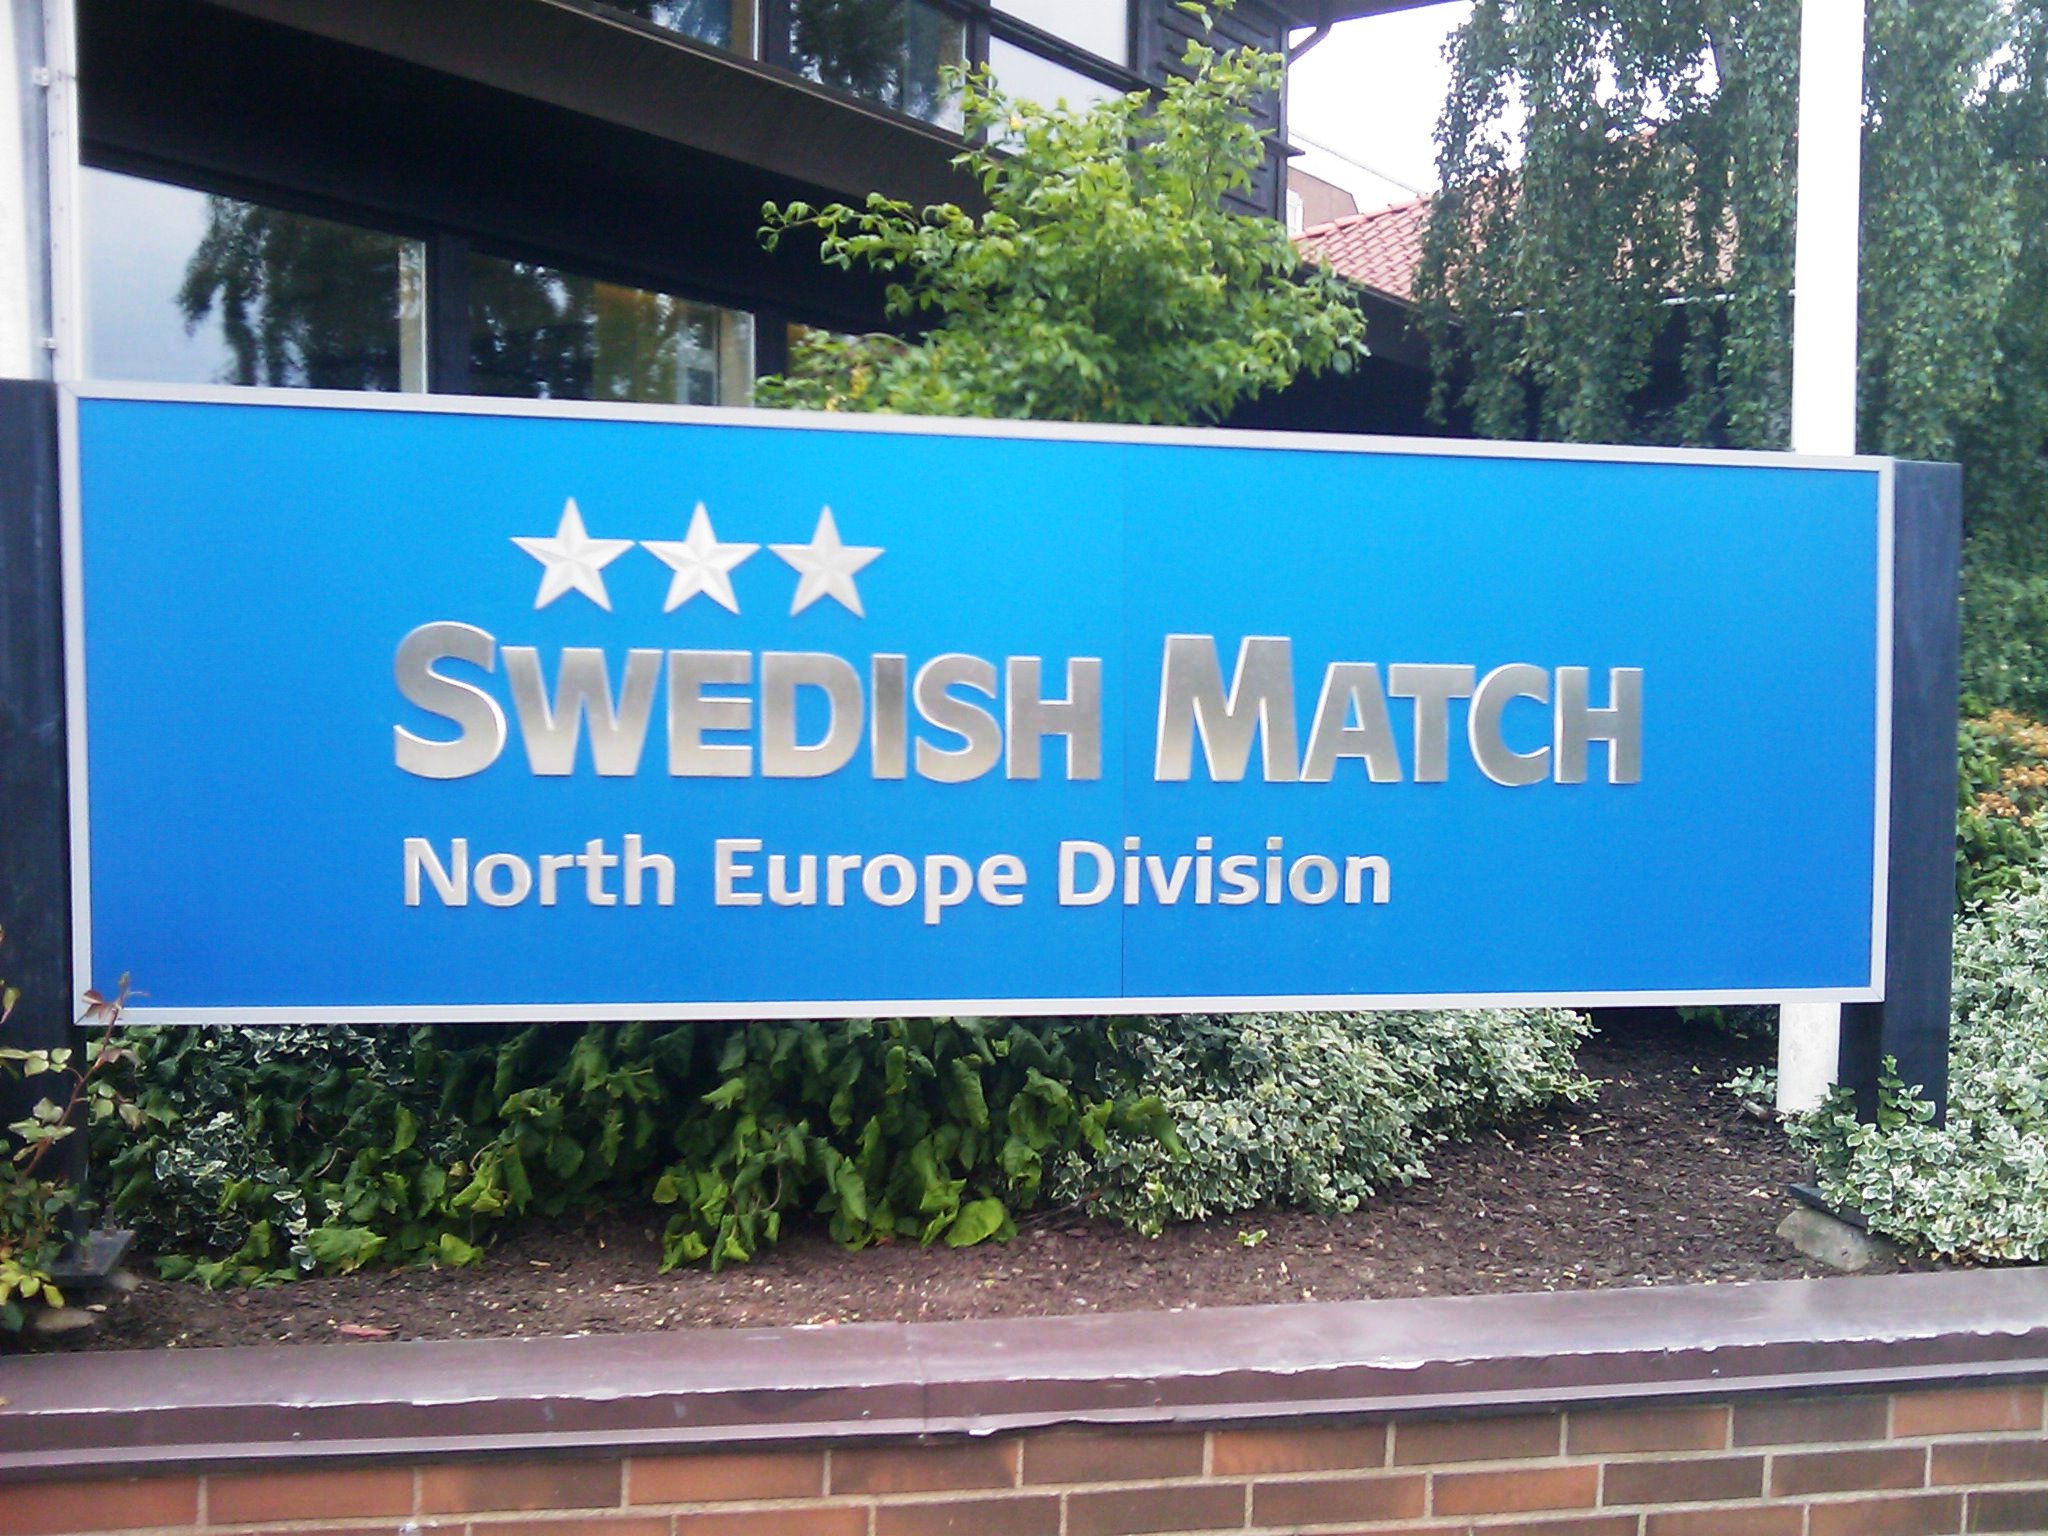 The Swedish Match Factory in Gothenburg, Sweden